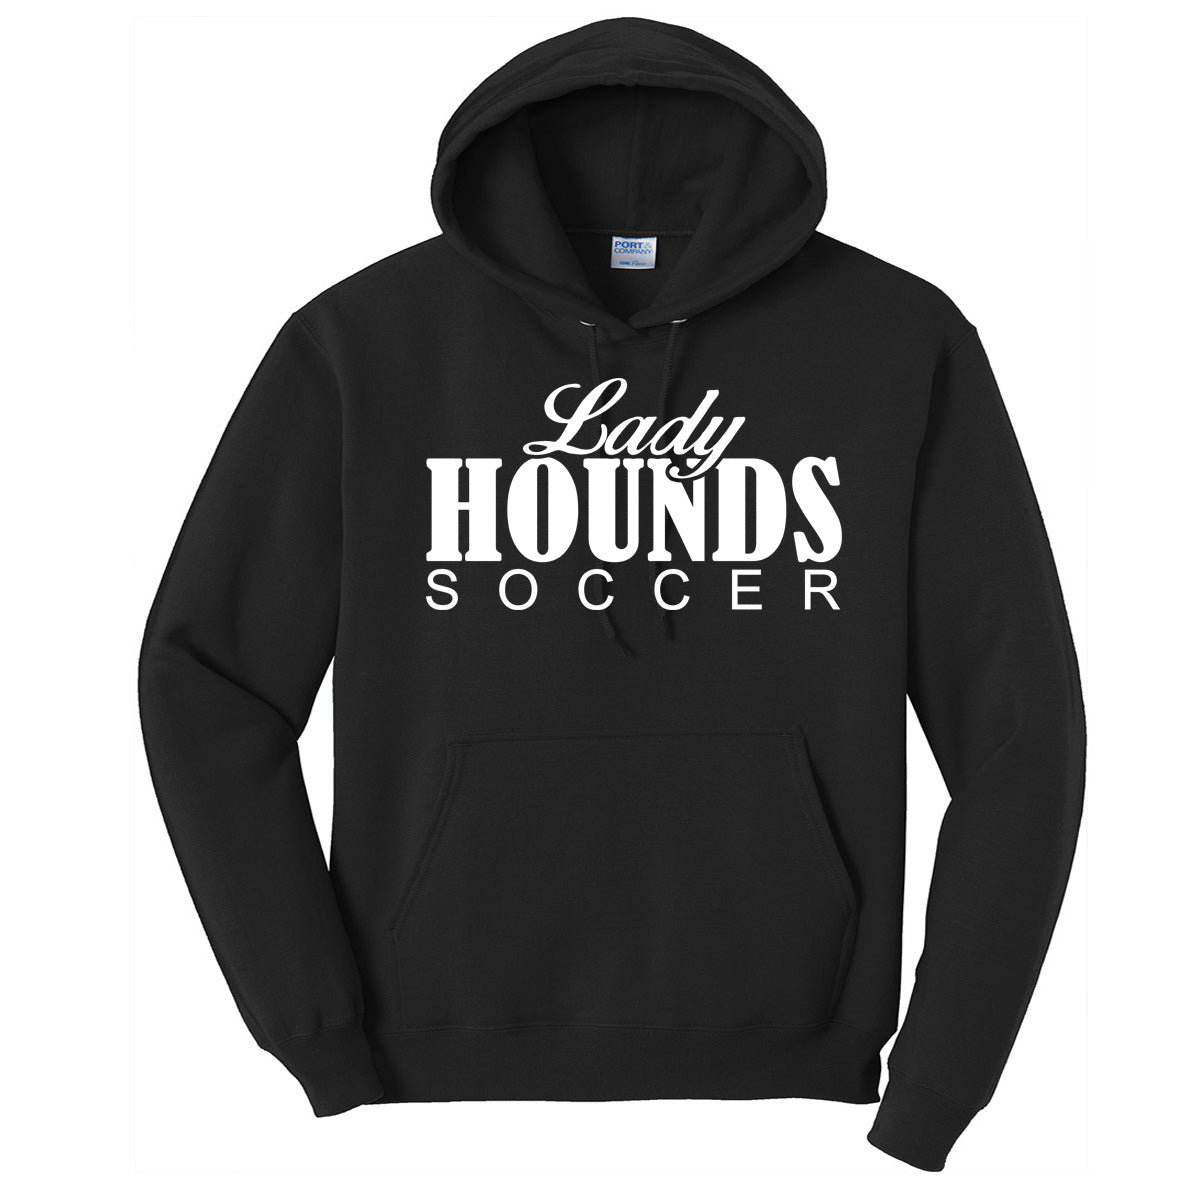 Jones County - Lady Hounds Soccer (bernard) - Black (Tee/DriFit/Hoodie/Sweatshirt) - Southern Grace Creations